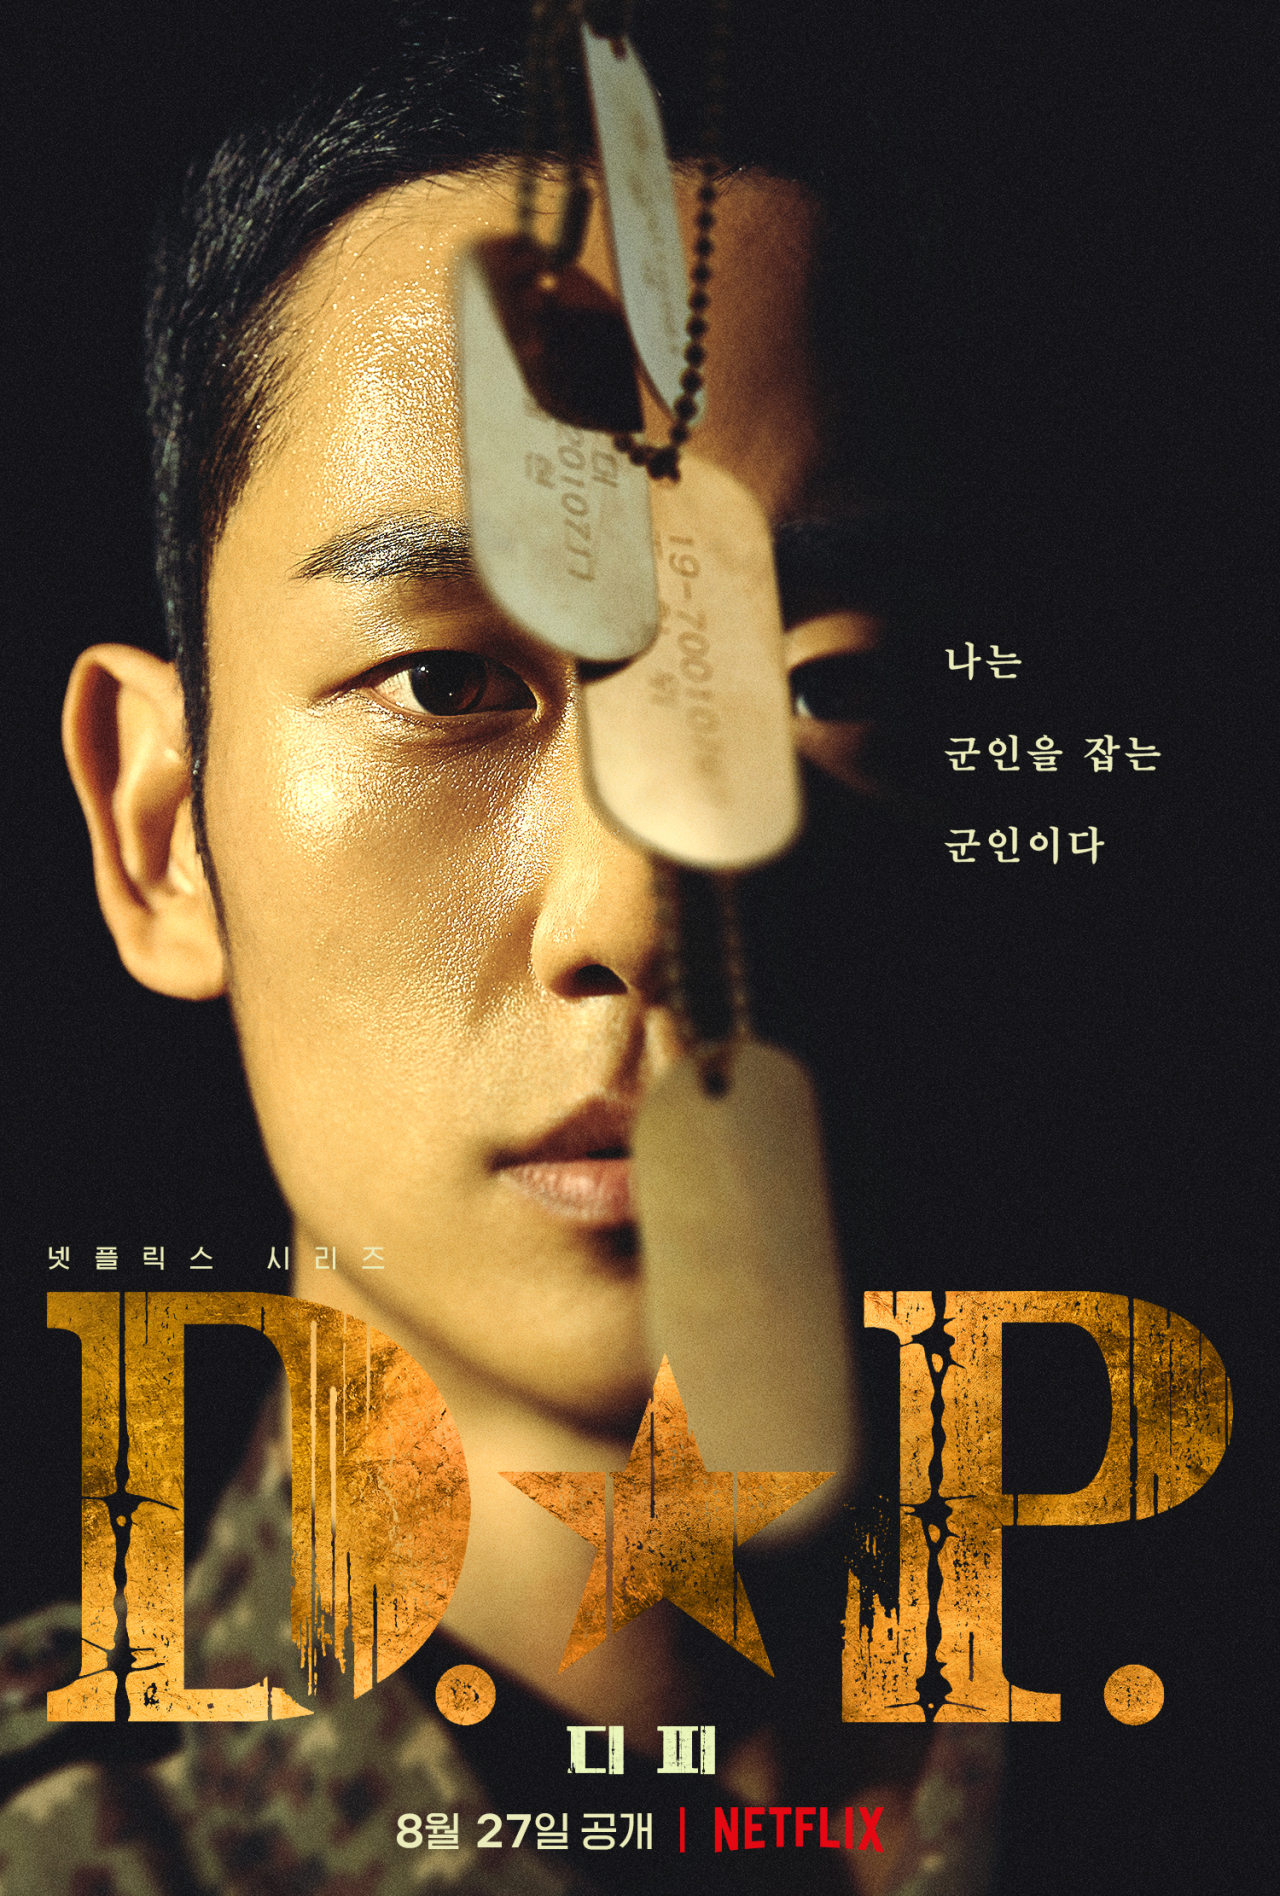 Poster image of “D.P.” (Netflix)